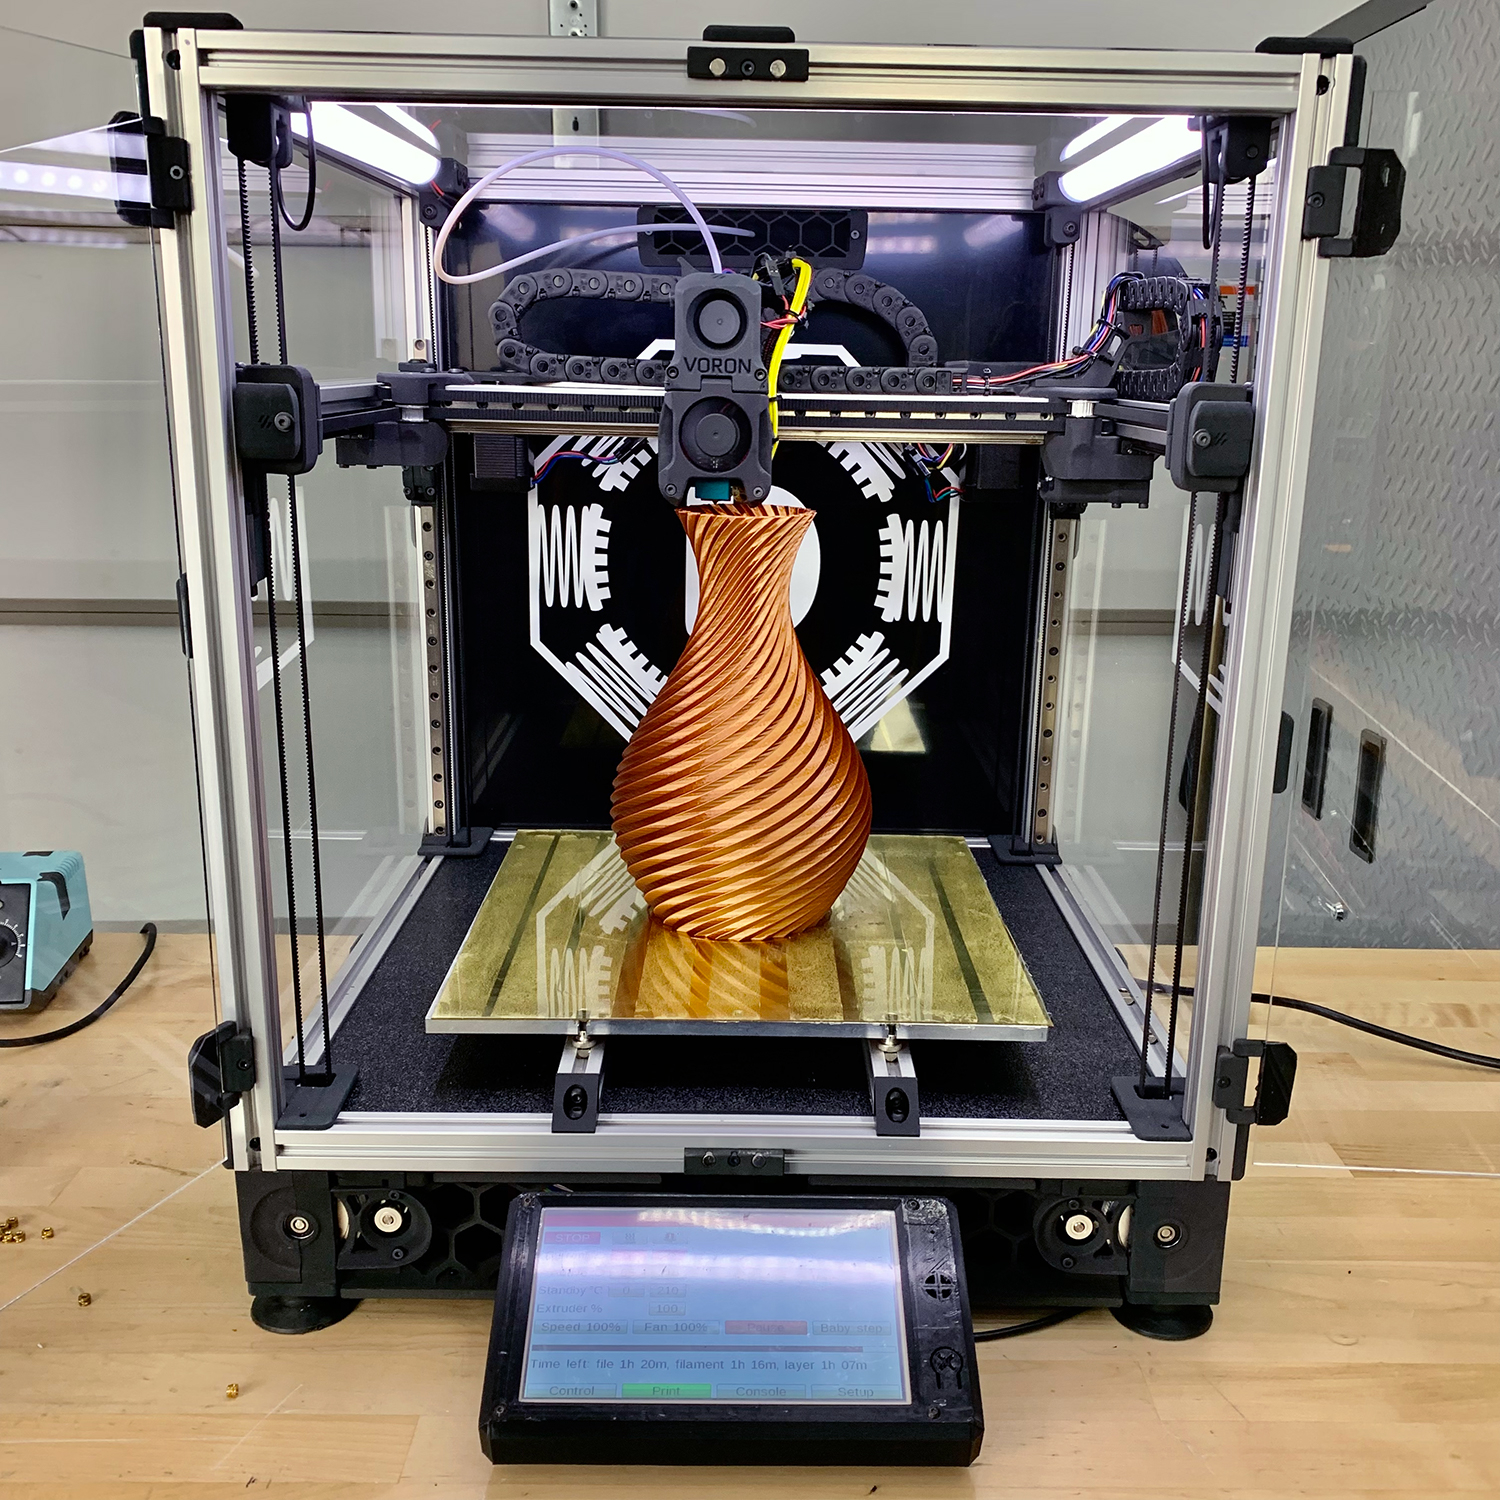 How to Build a 3D Printer